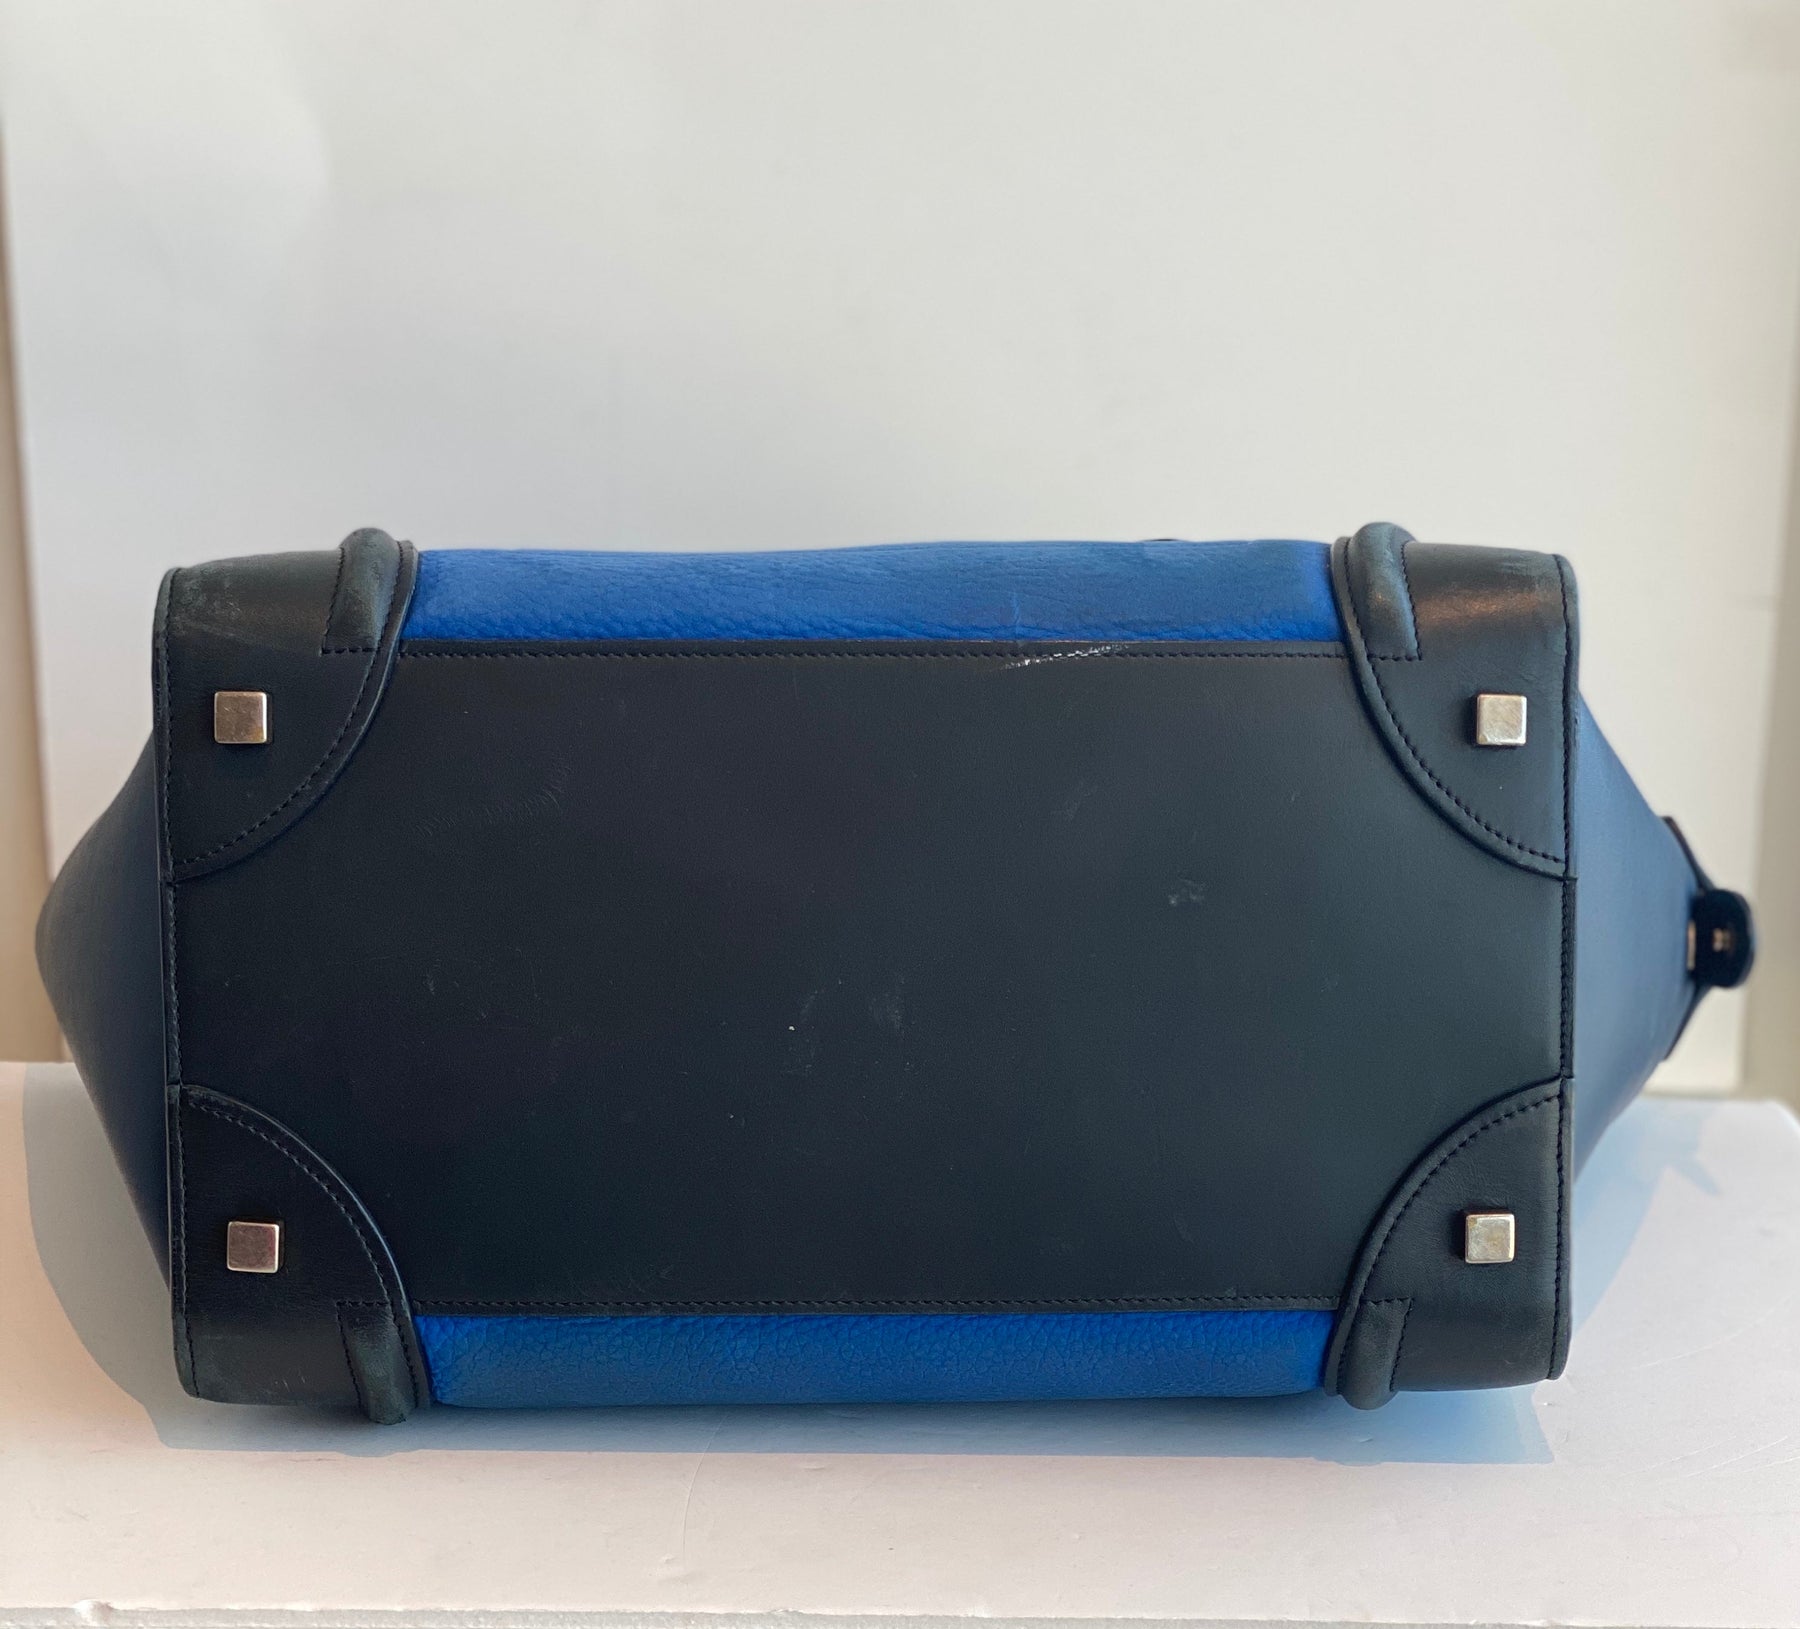 Celine Luggage Tote Mini Black and Blue Bottom of Bag